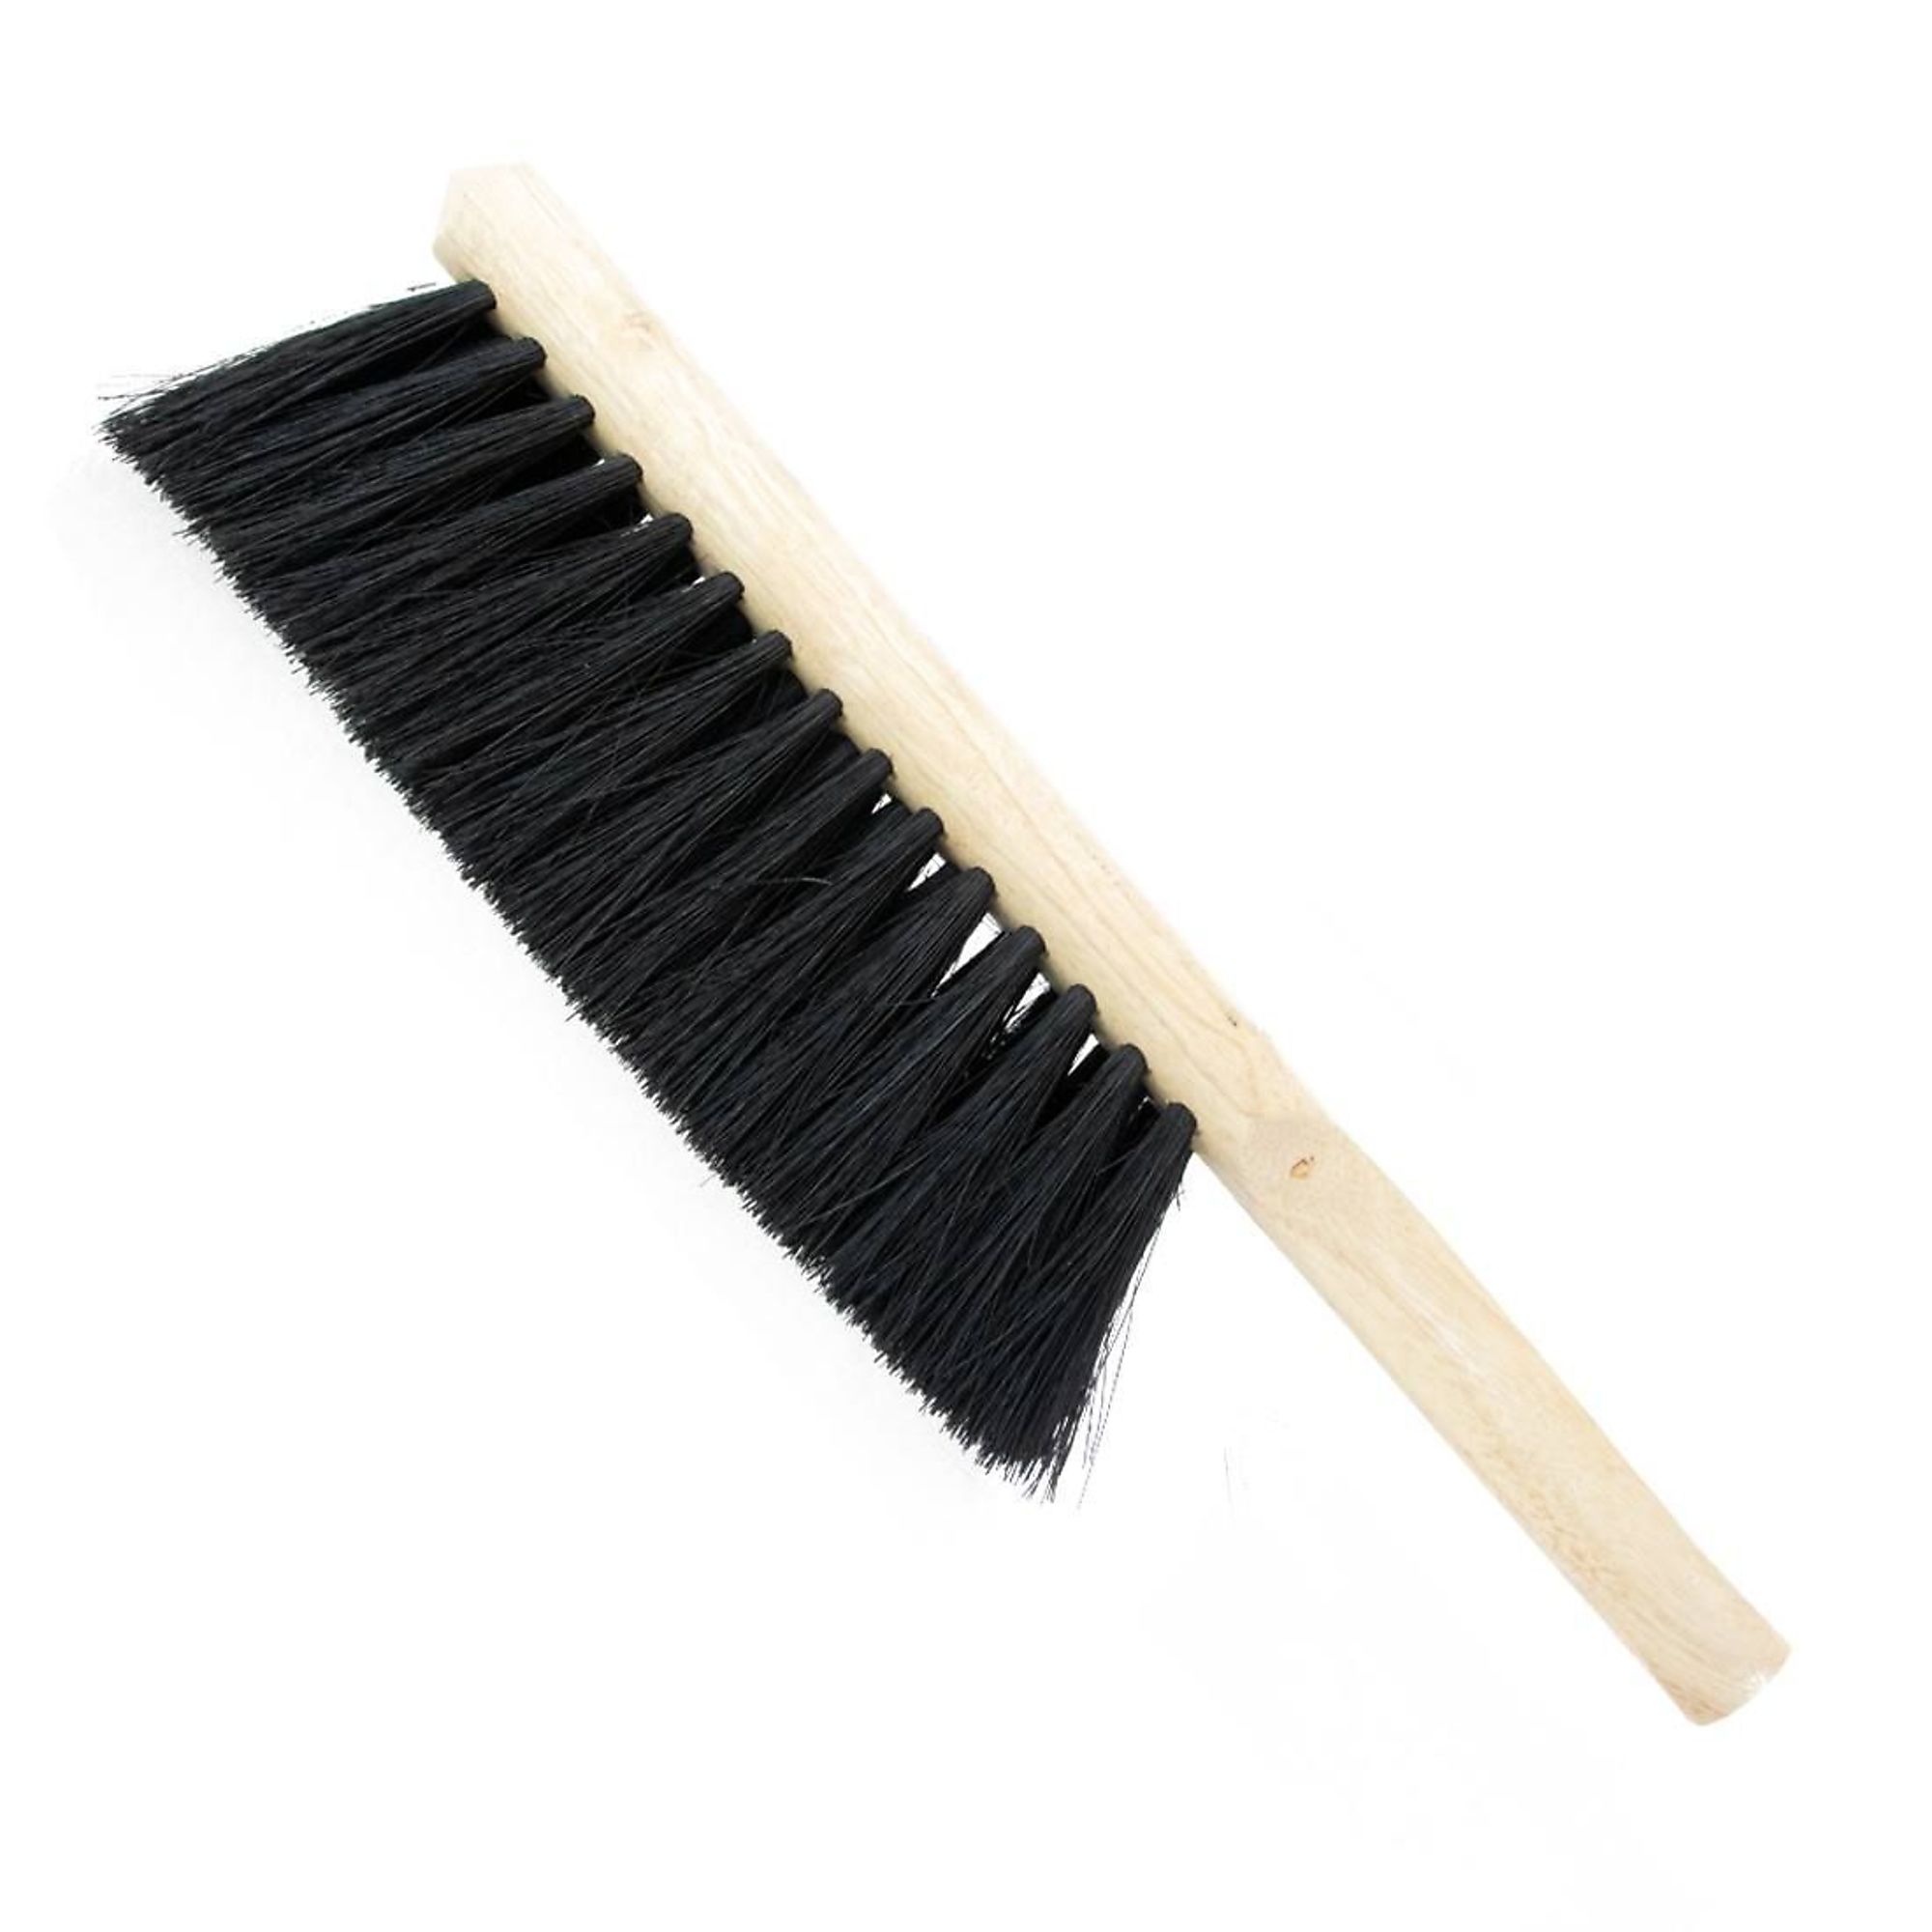 XERO, Medium Bristle Dust Brush, Model 209-14-01